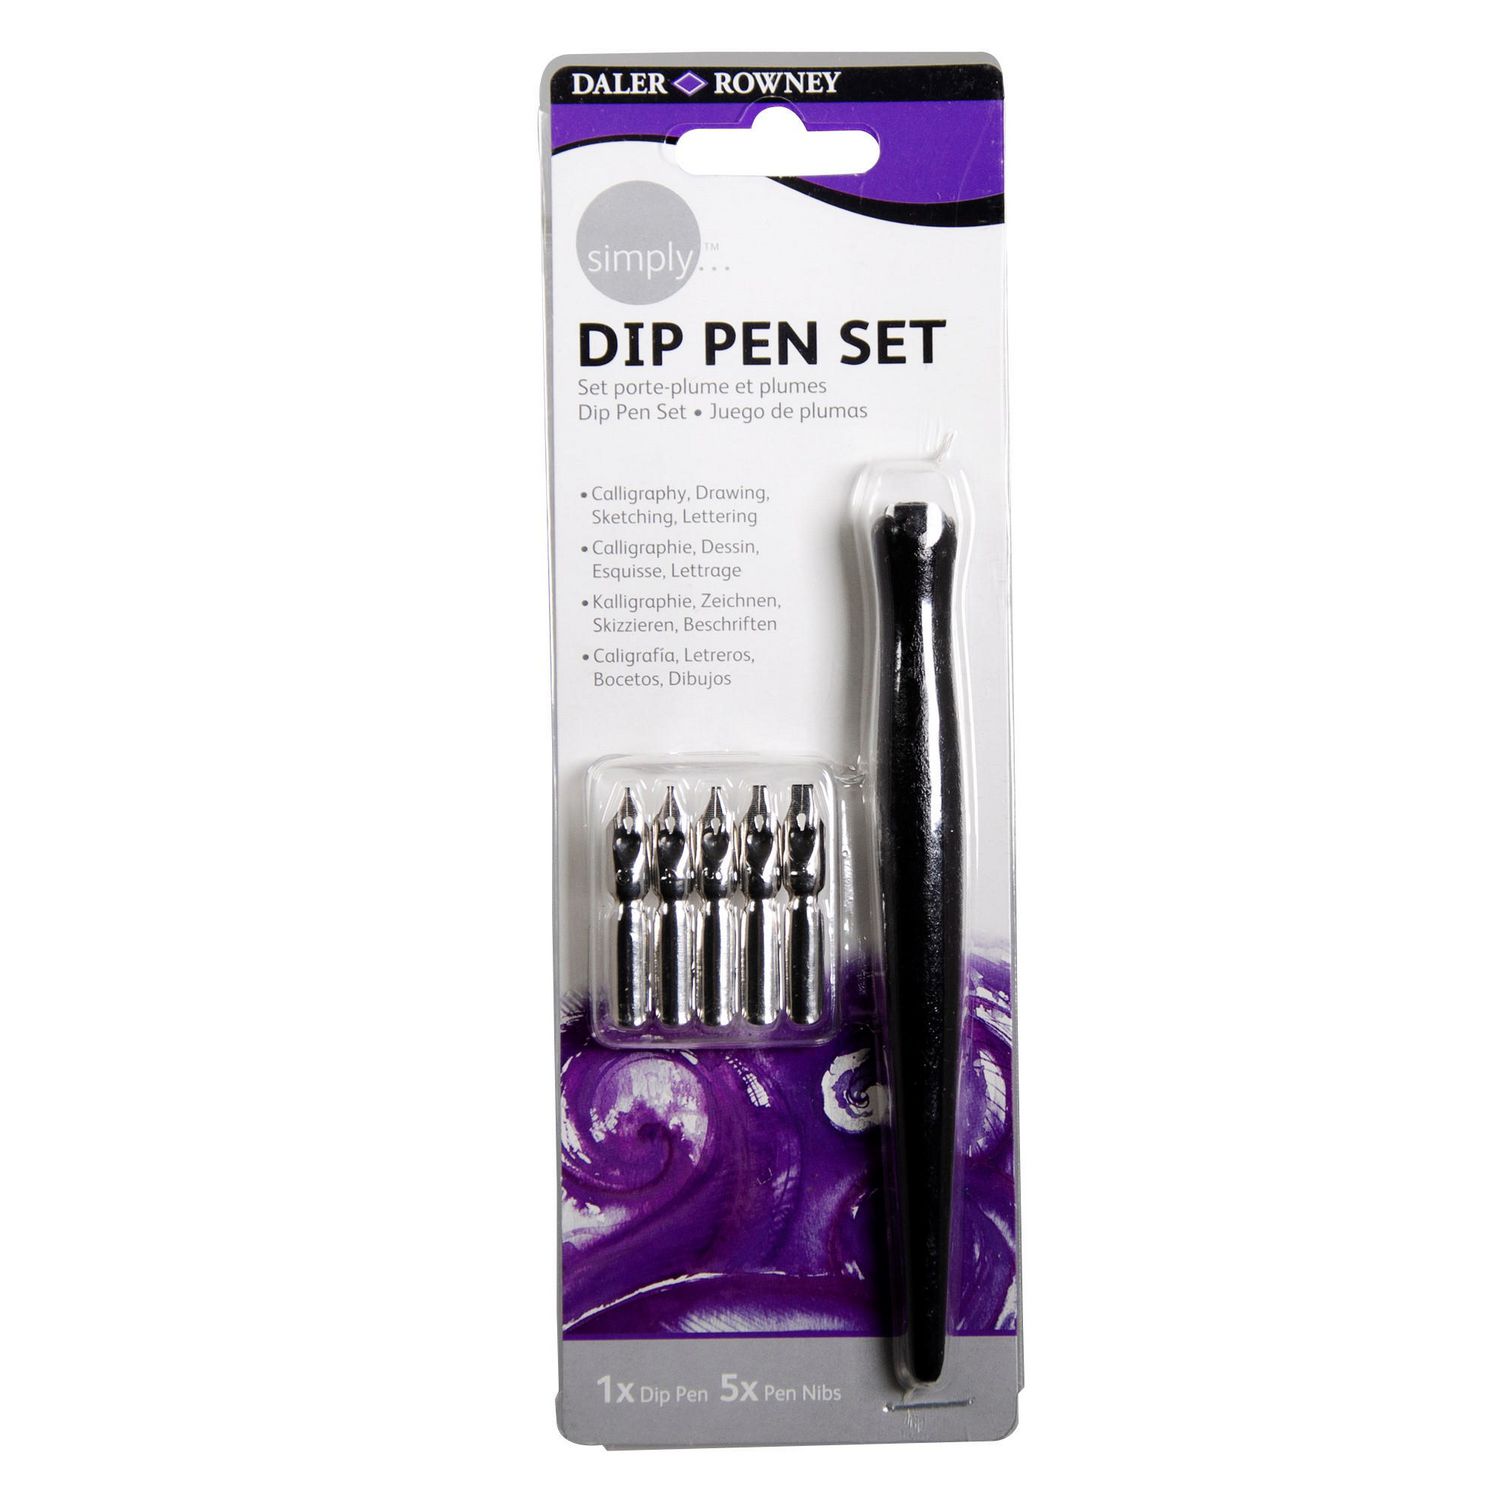 Dip pen set